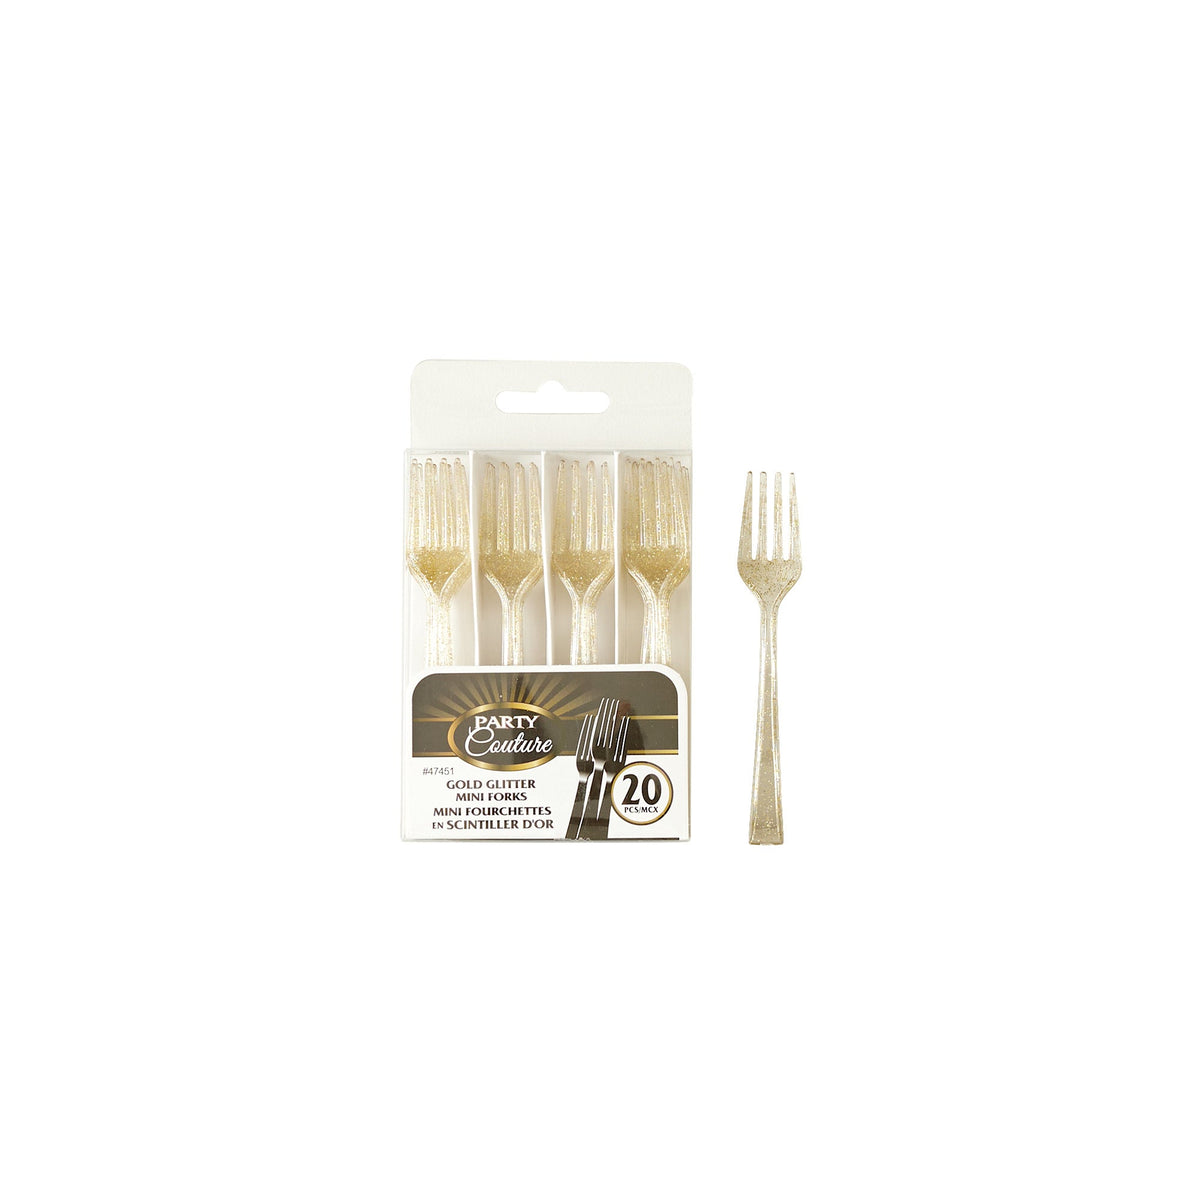 MADISON IMPORTS Disposable-Plasticware Gold Glitter Premium Quality Mini Forks, 20 Count 775310474512